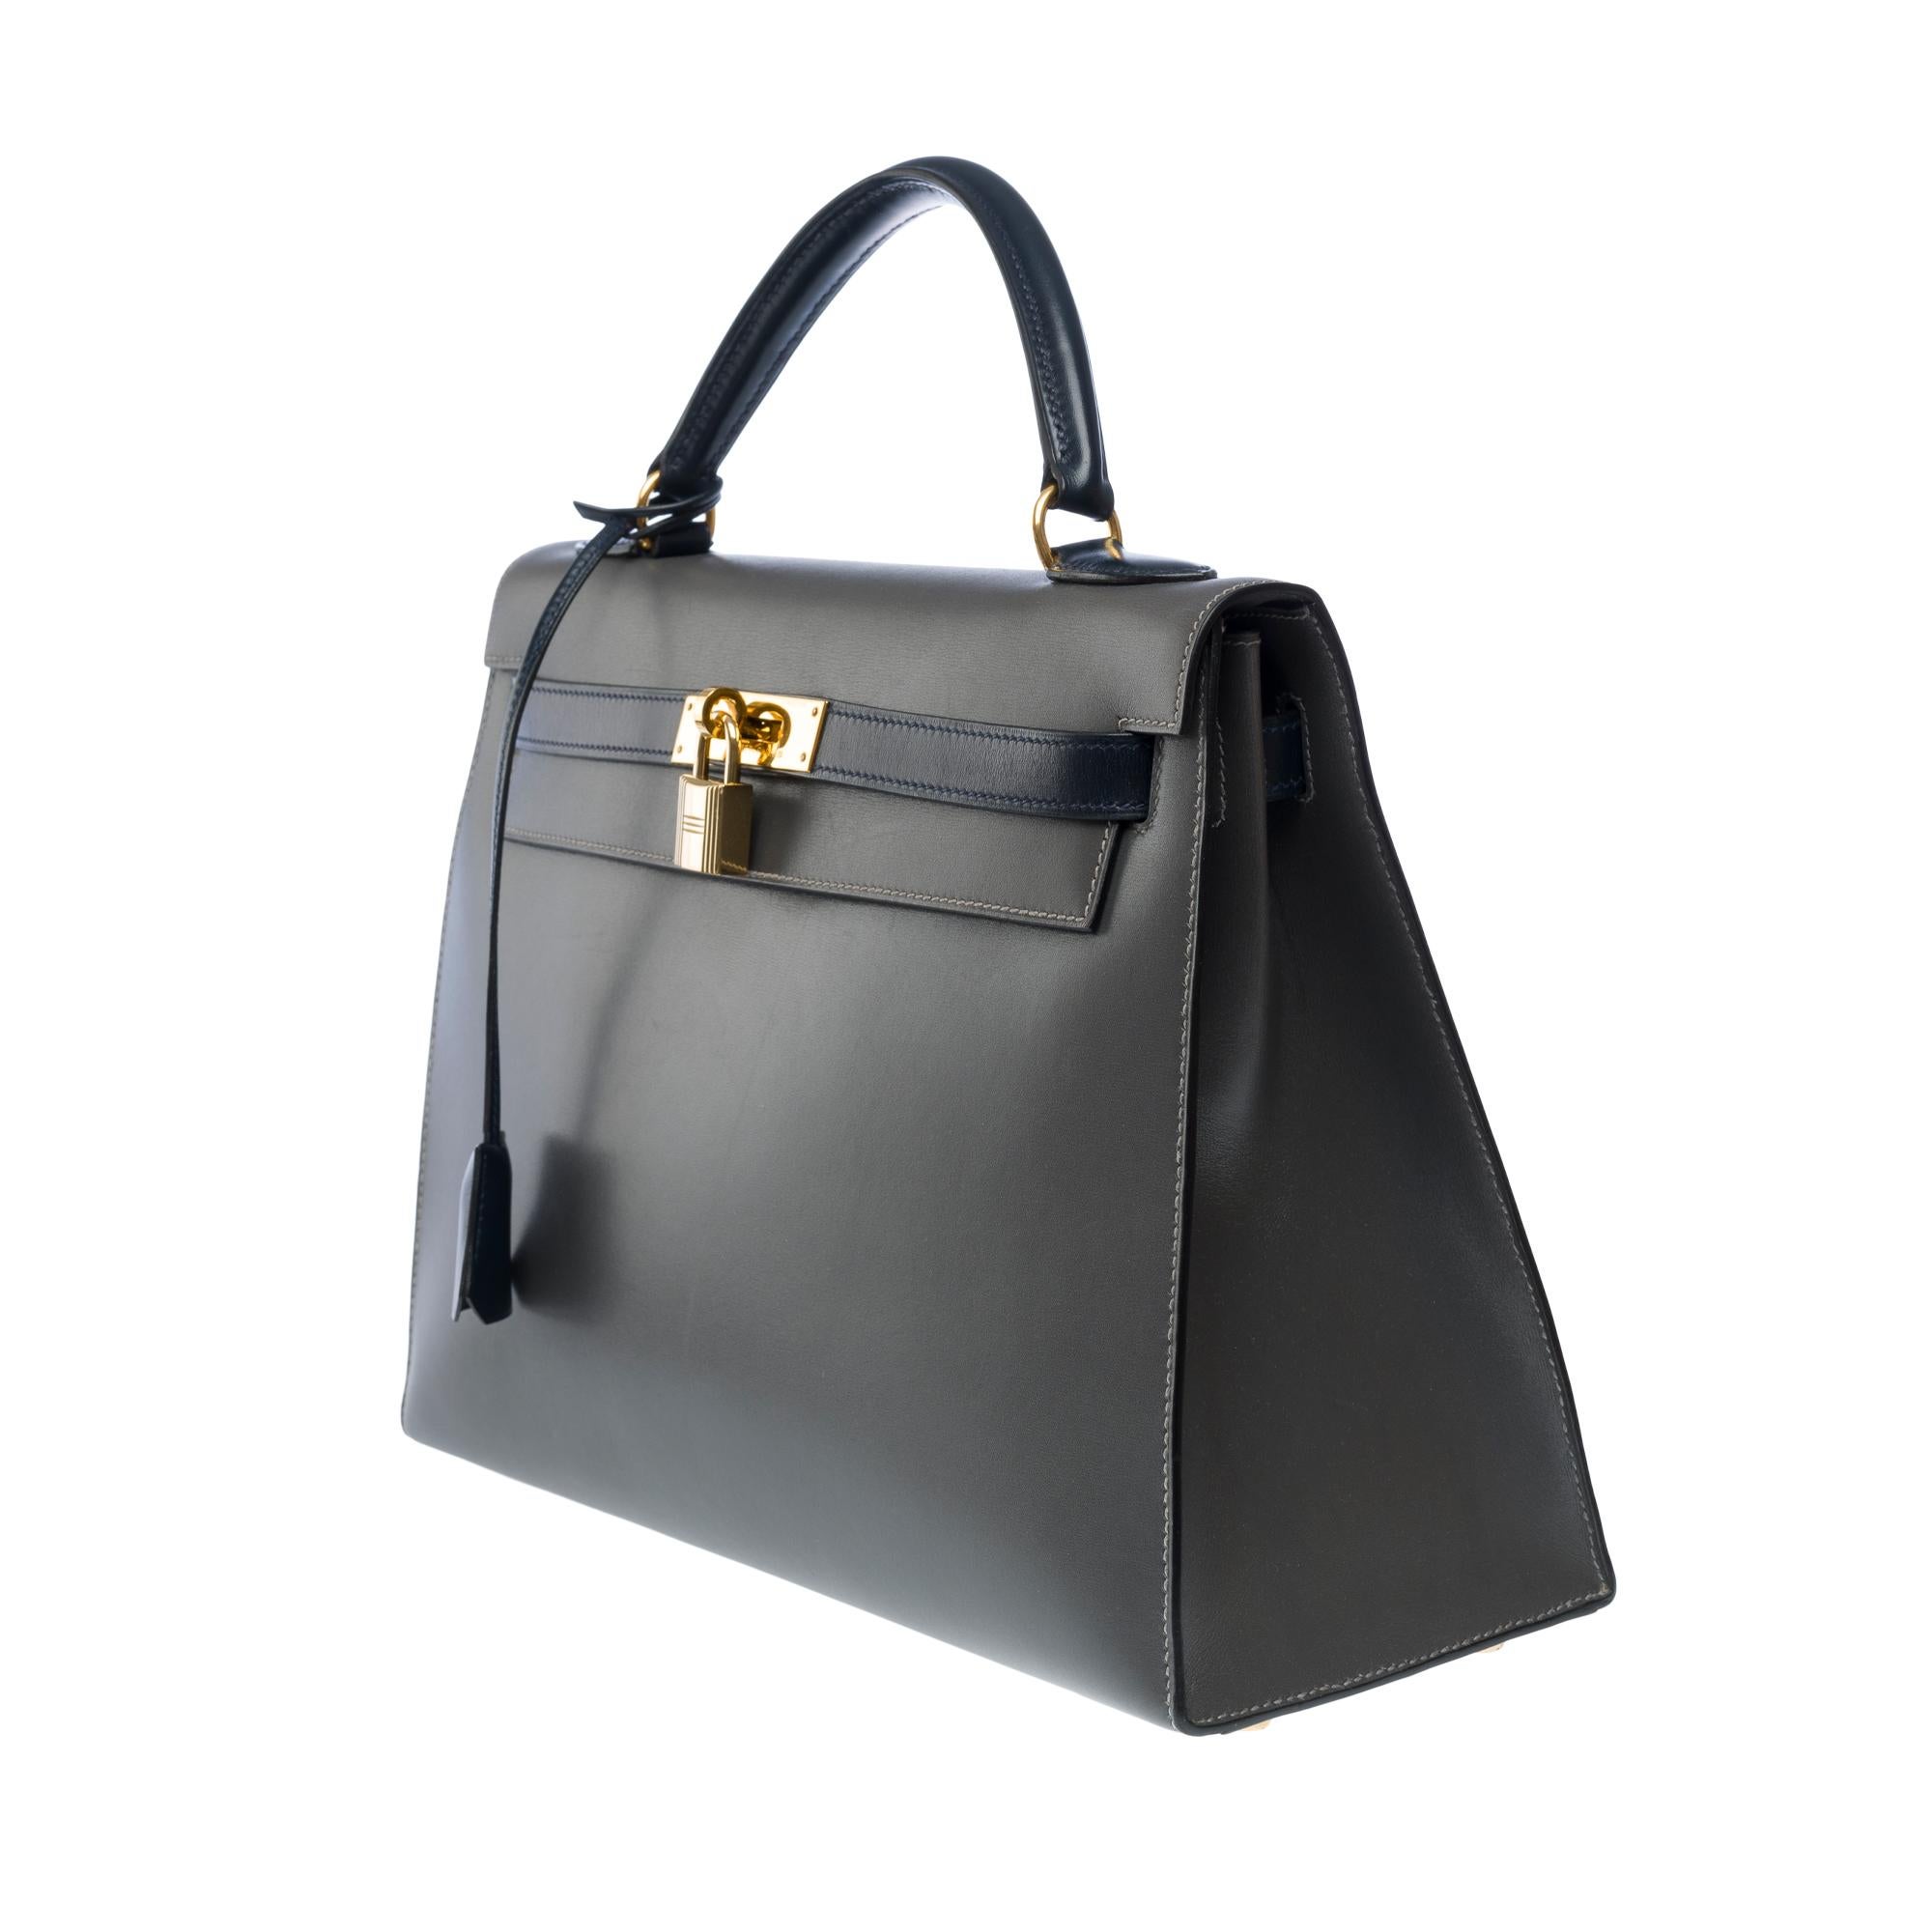 Women's Rare Hermès Kelly 32 sellier handbag strap in Navy & Black calfskin leather, GHW